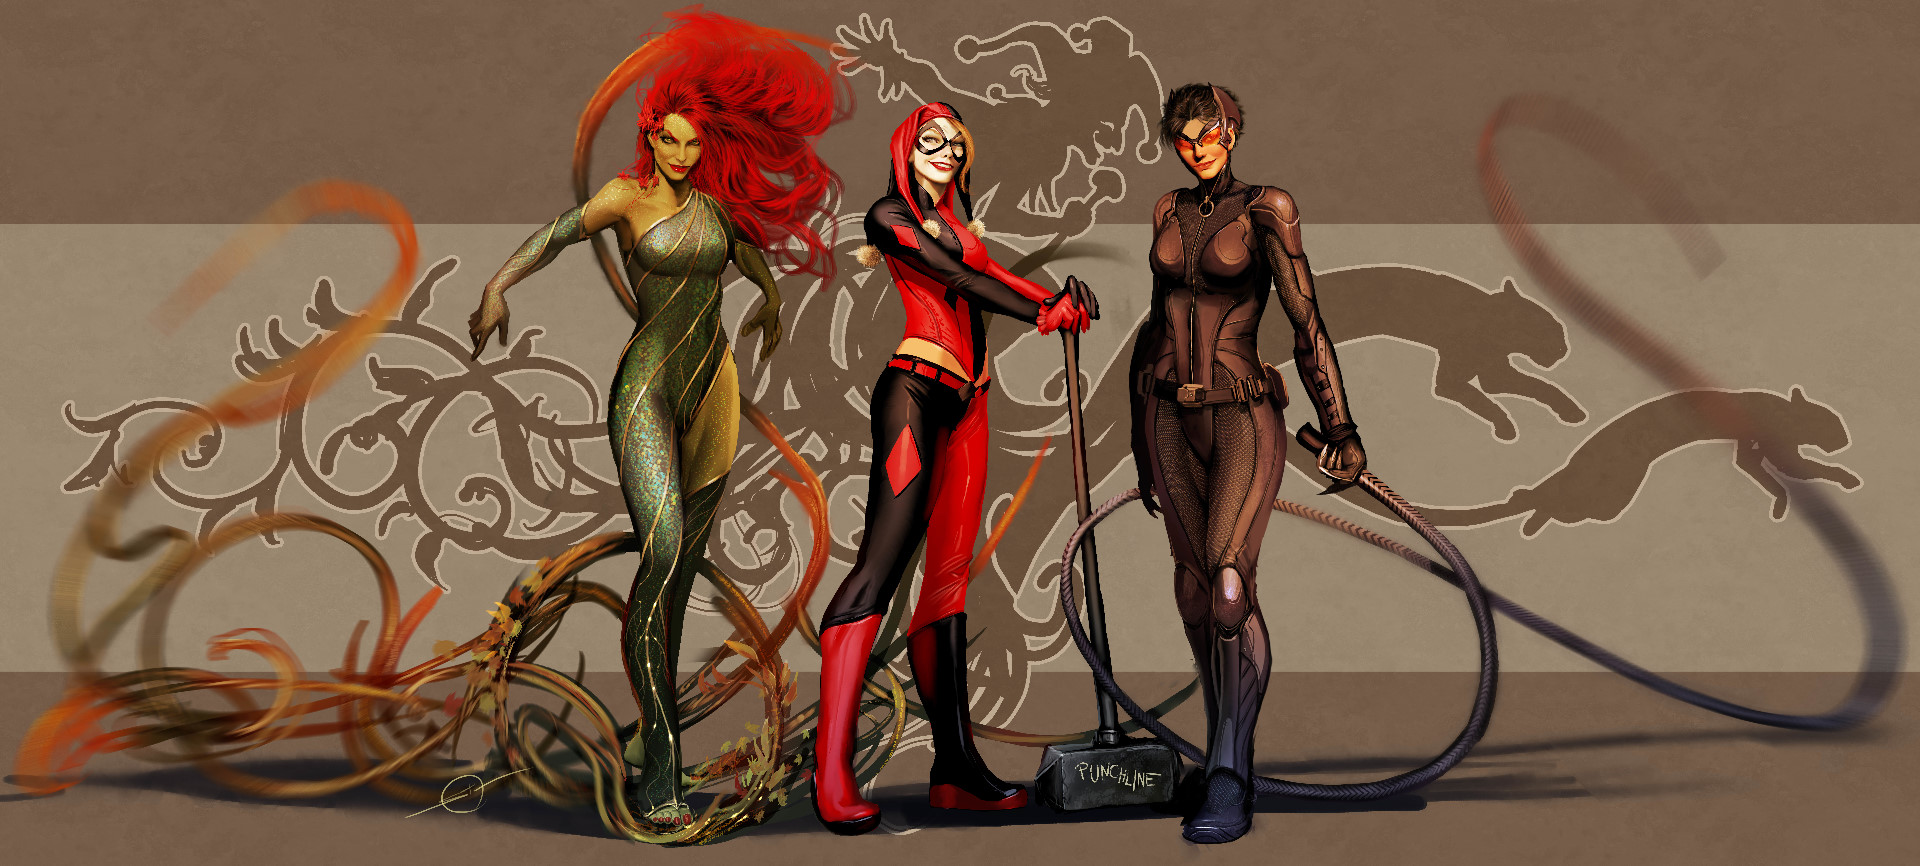 General 1920x866 Nebezial Harley Quinn Poison Ivy Catwoman artwork DeviantArt fantasy art group of women redhead digital art ultrawide